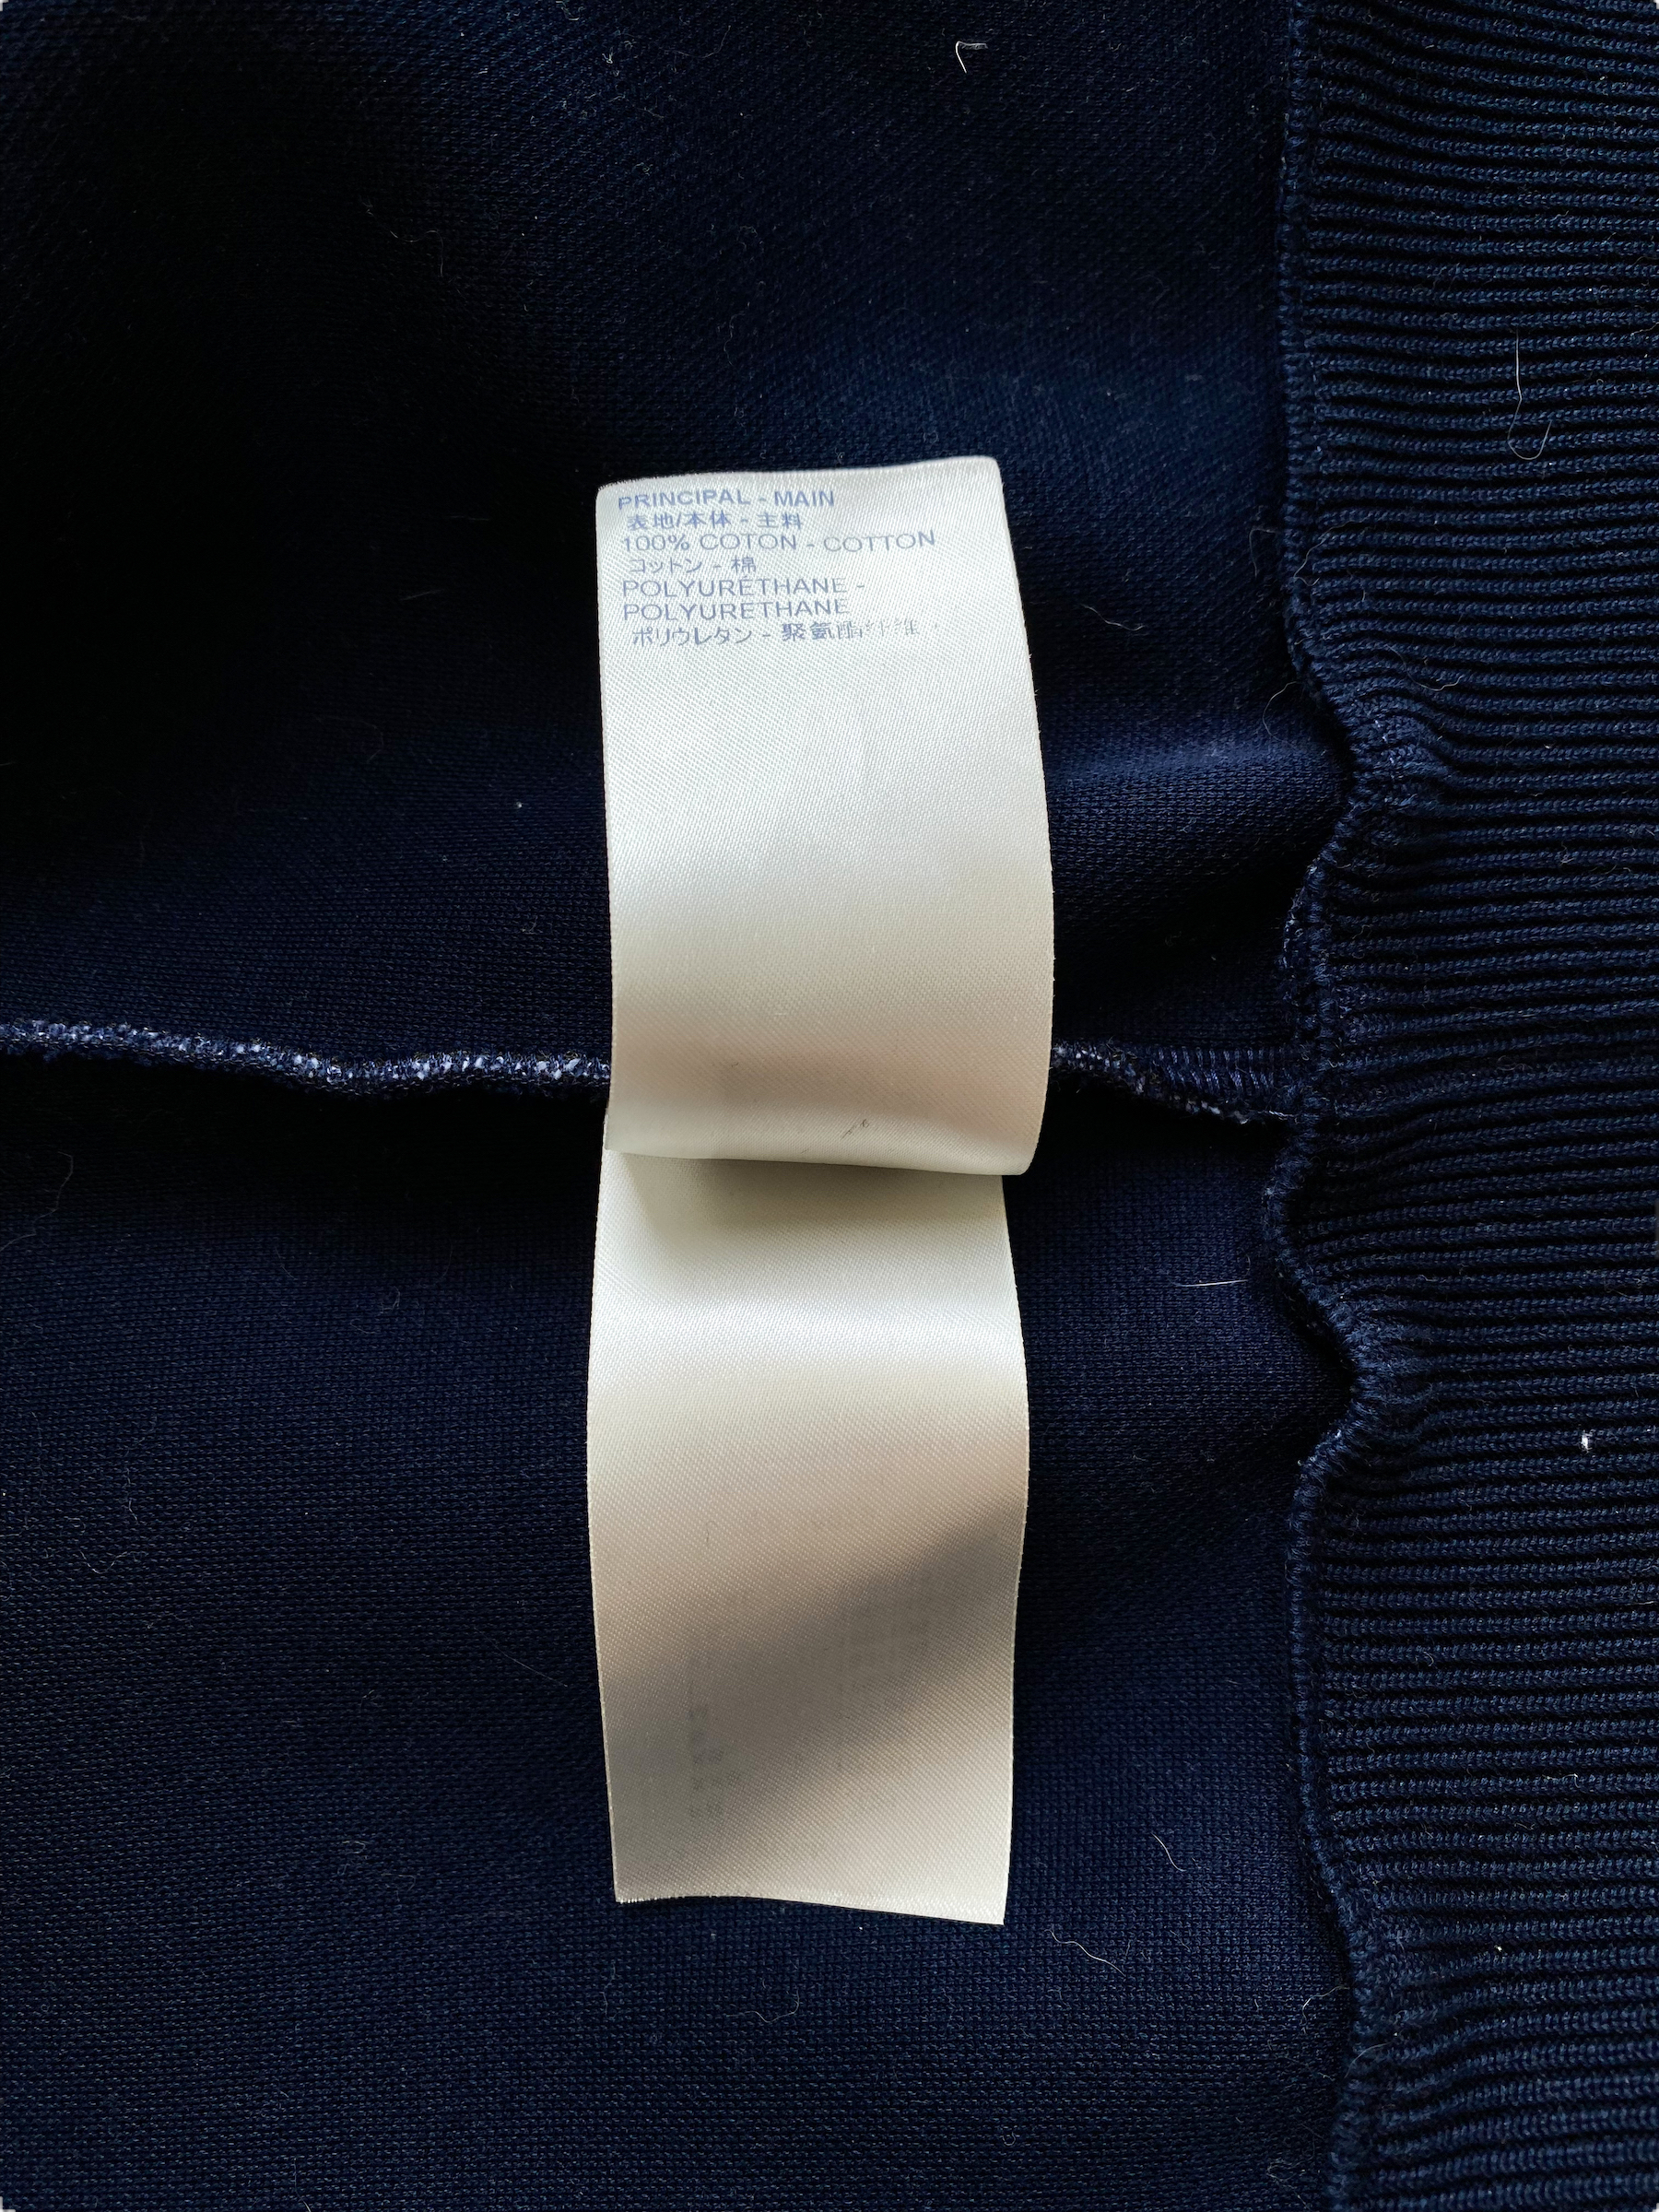 Louis Vuitton Men's Tapestry Monogram Sweatshirt Cotton Blue 138633185